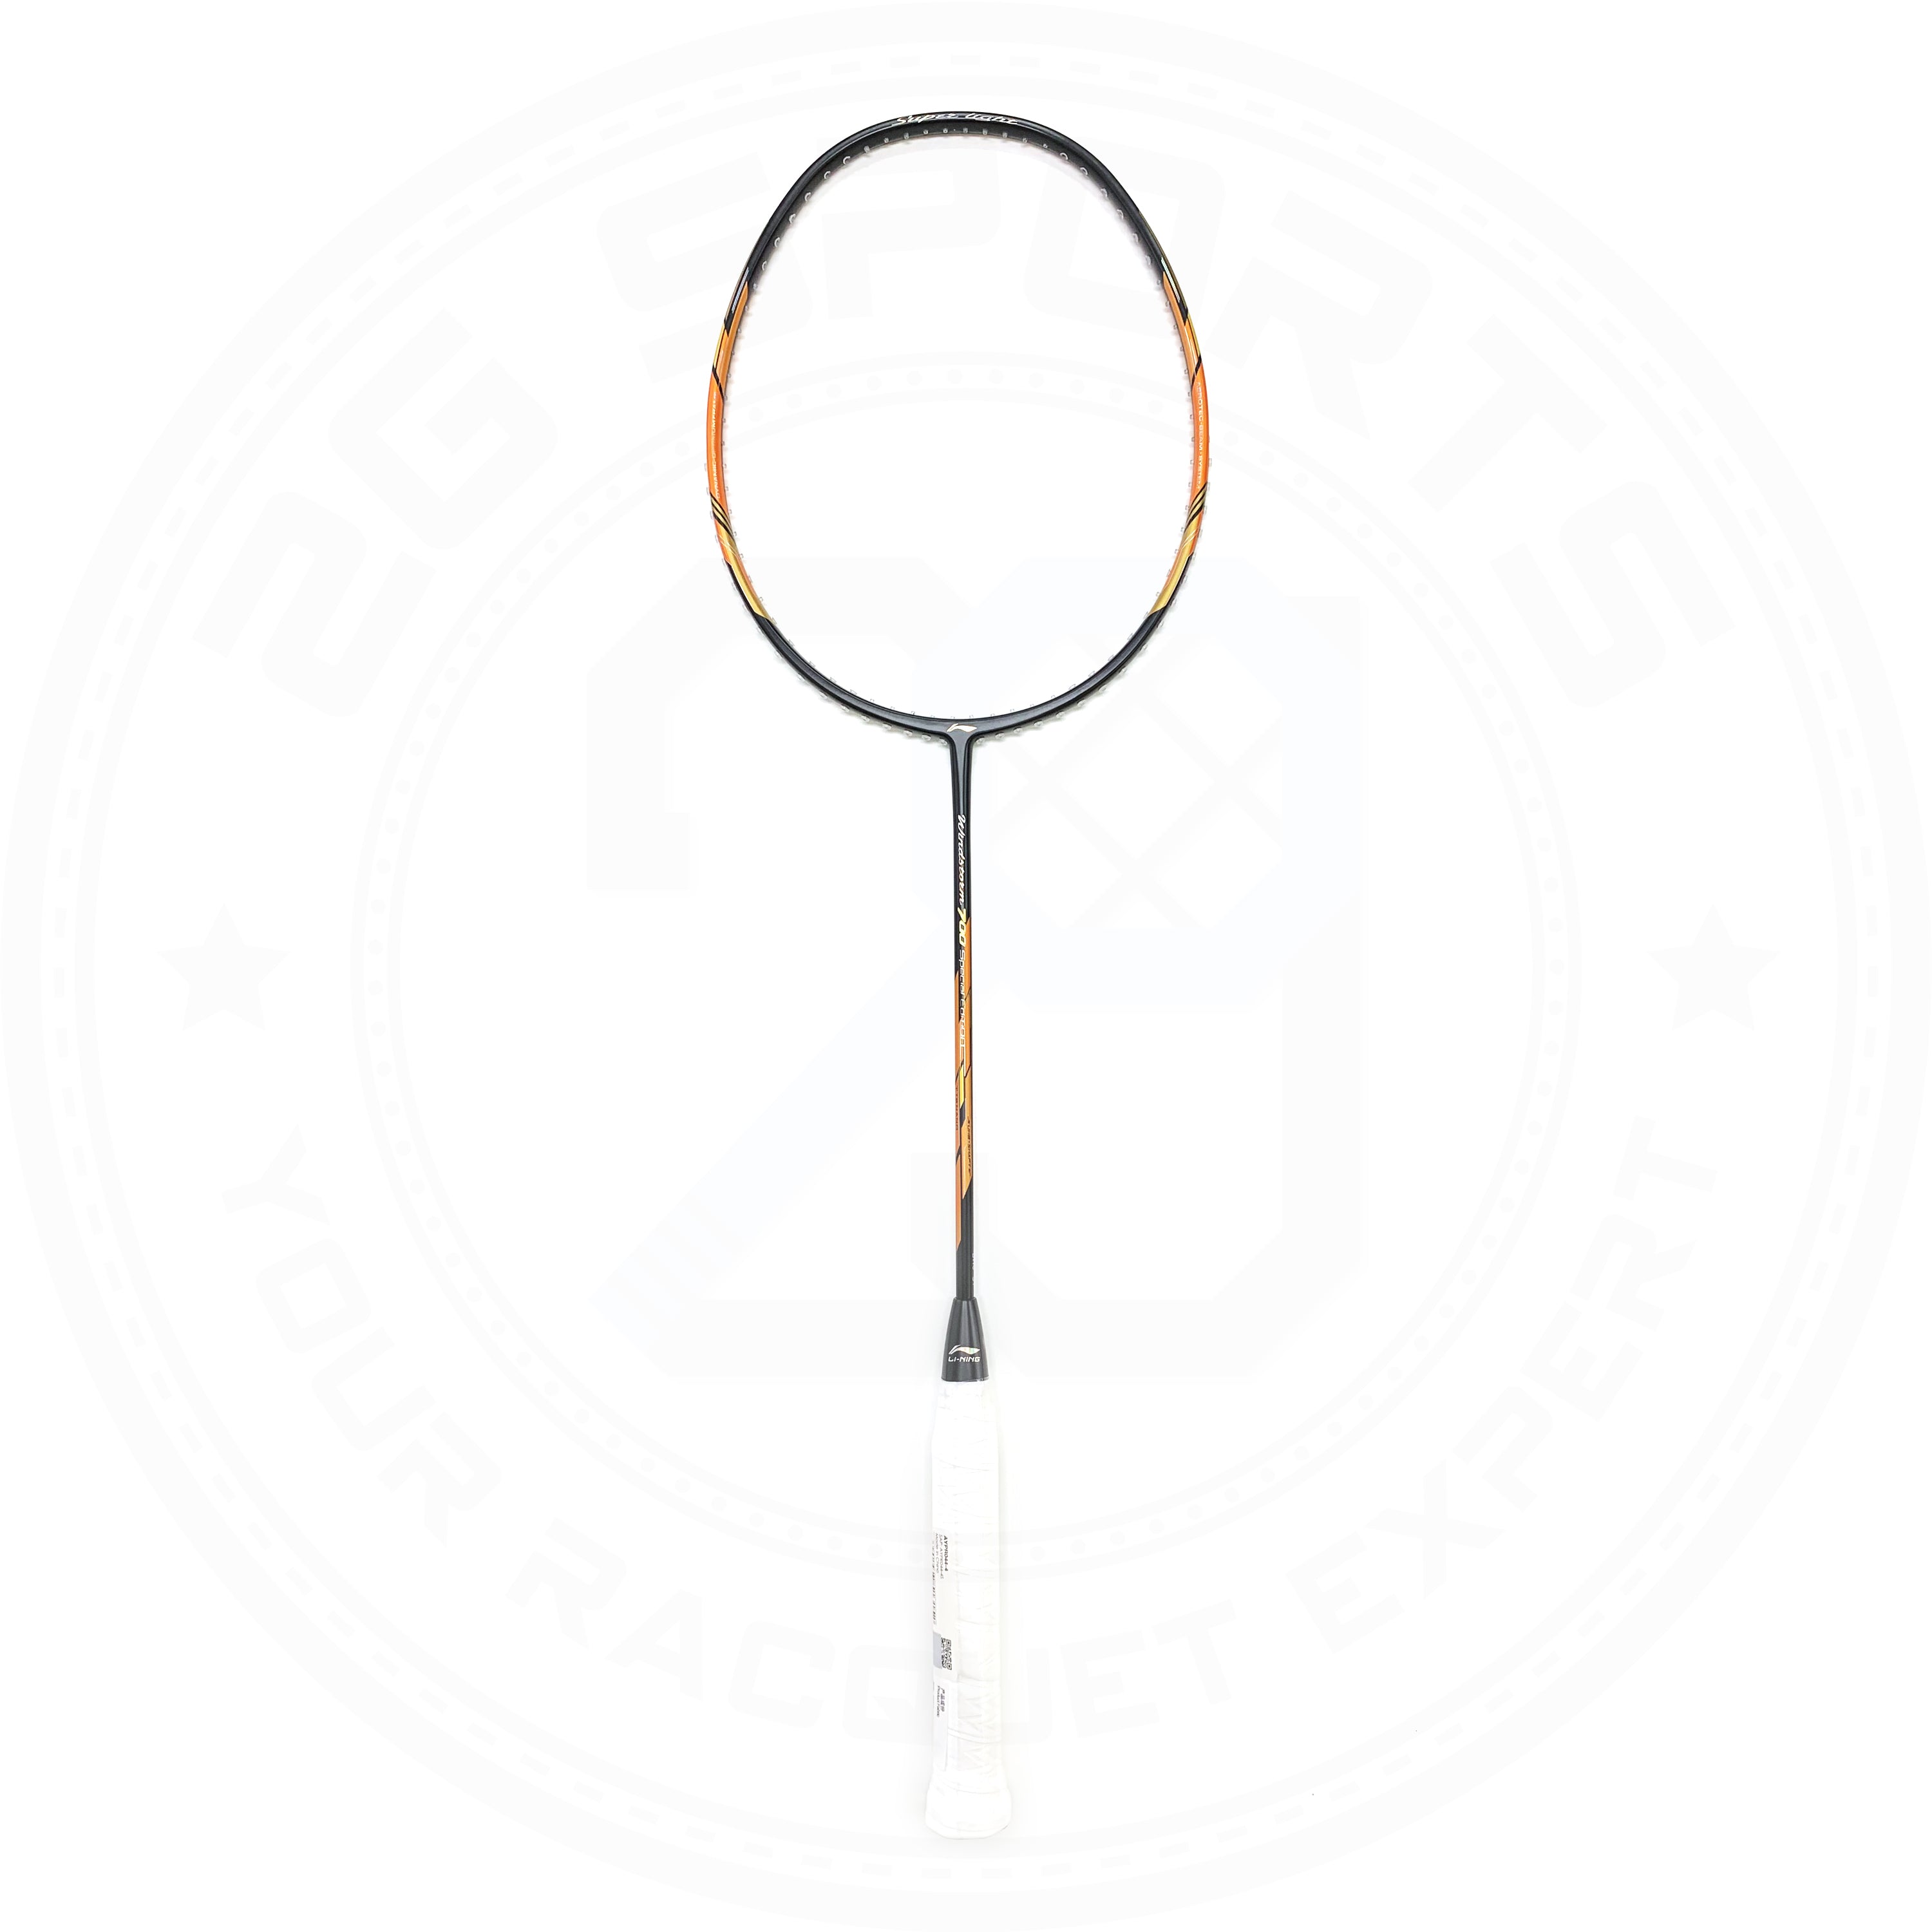 Li-Ning Windstorm 700 Special Edition Badminton Racquet Orange 5U(79g)G6